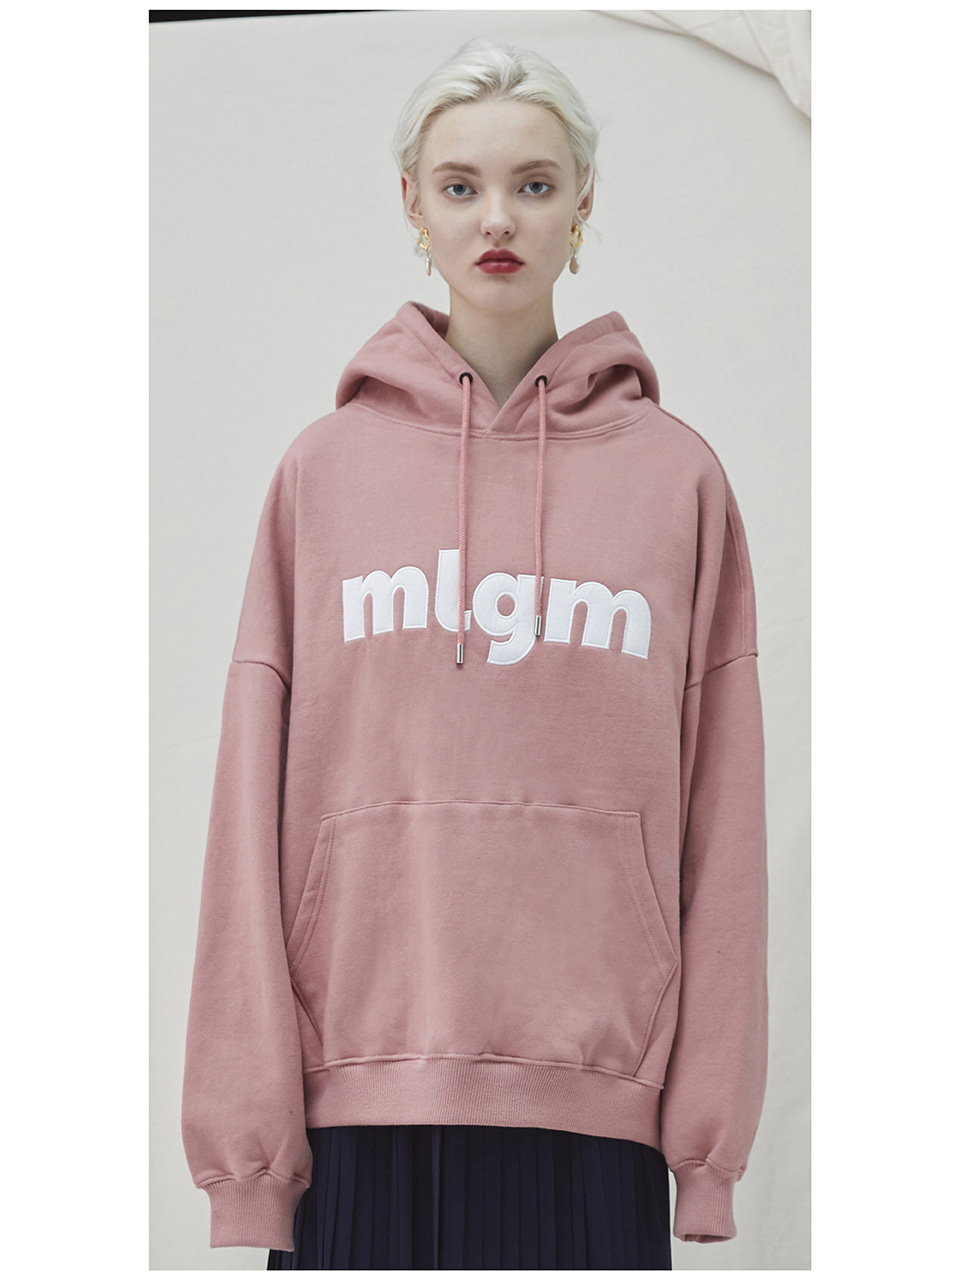 MLGM Napping Hoody - pink